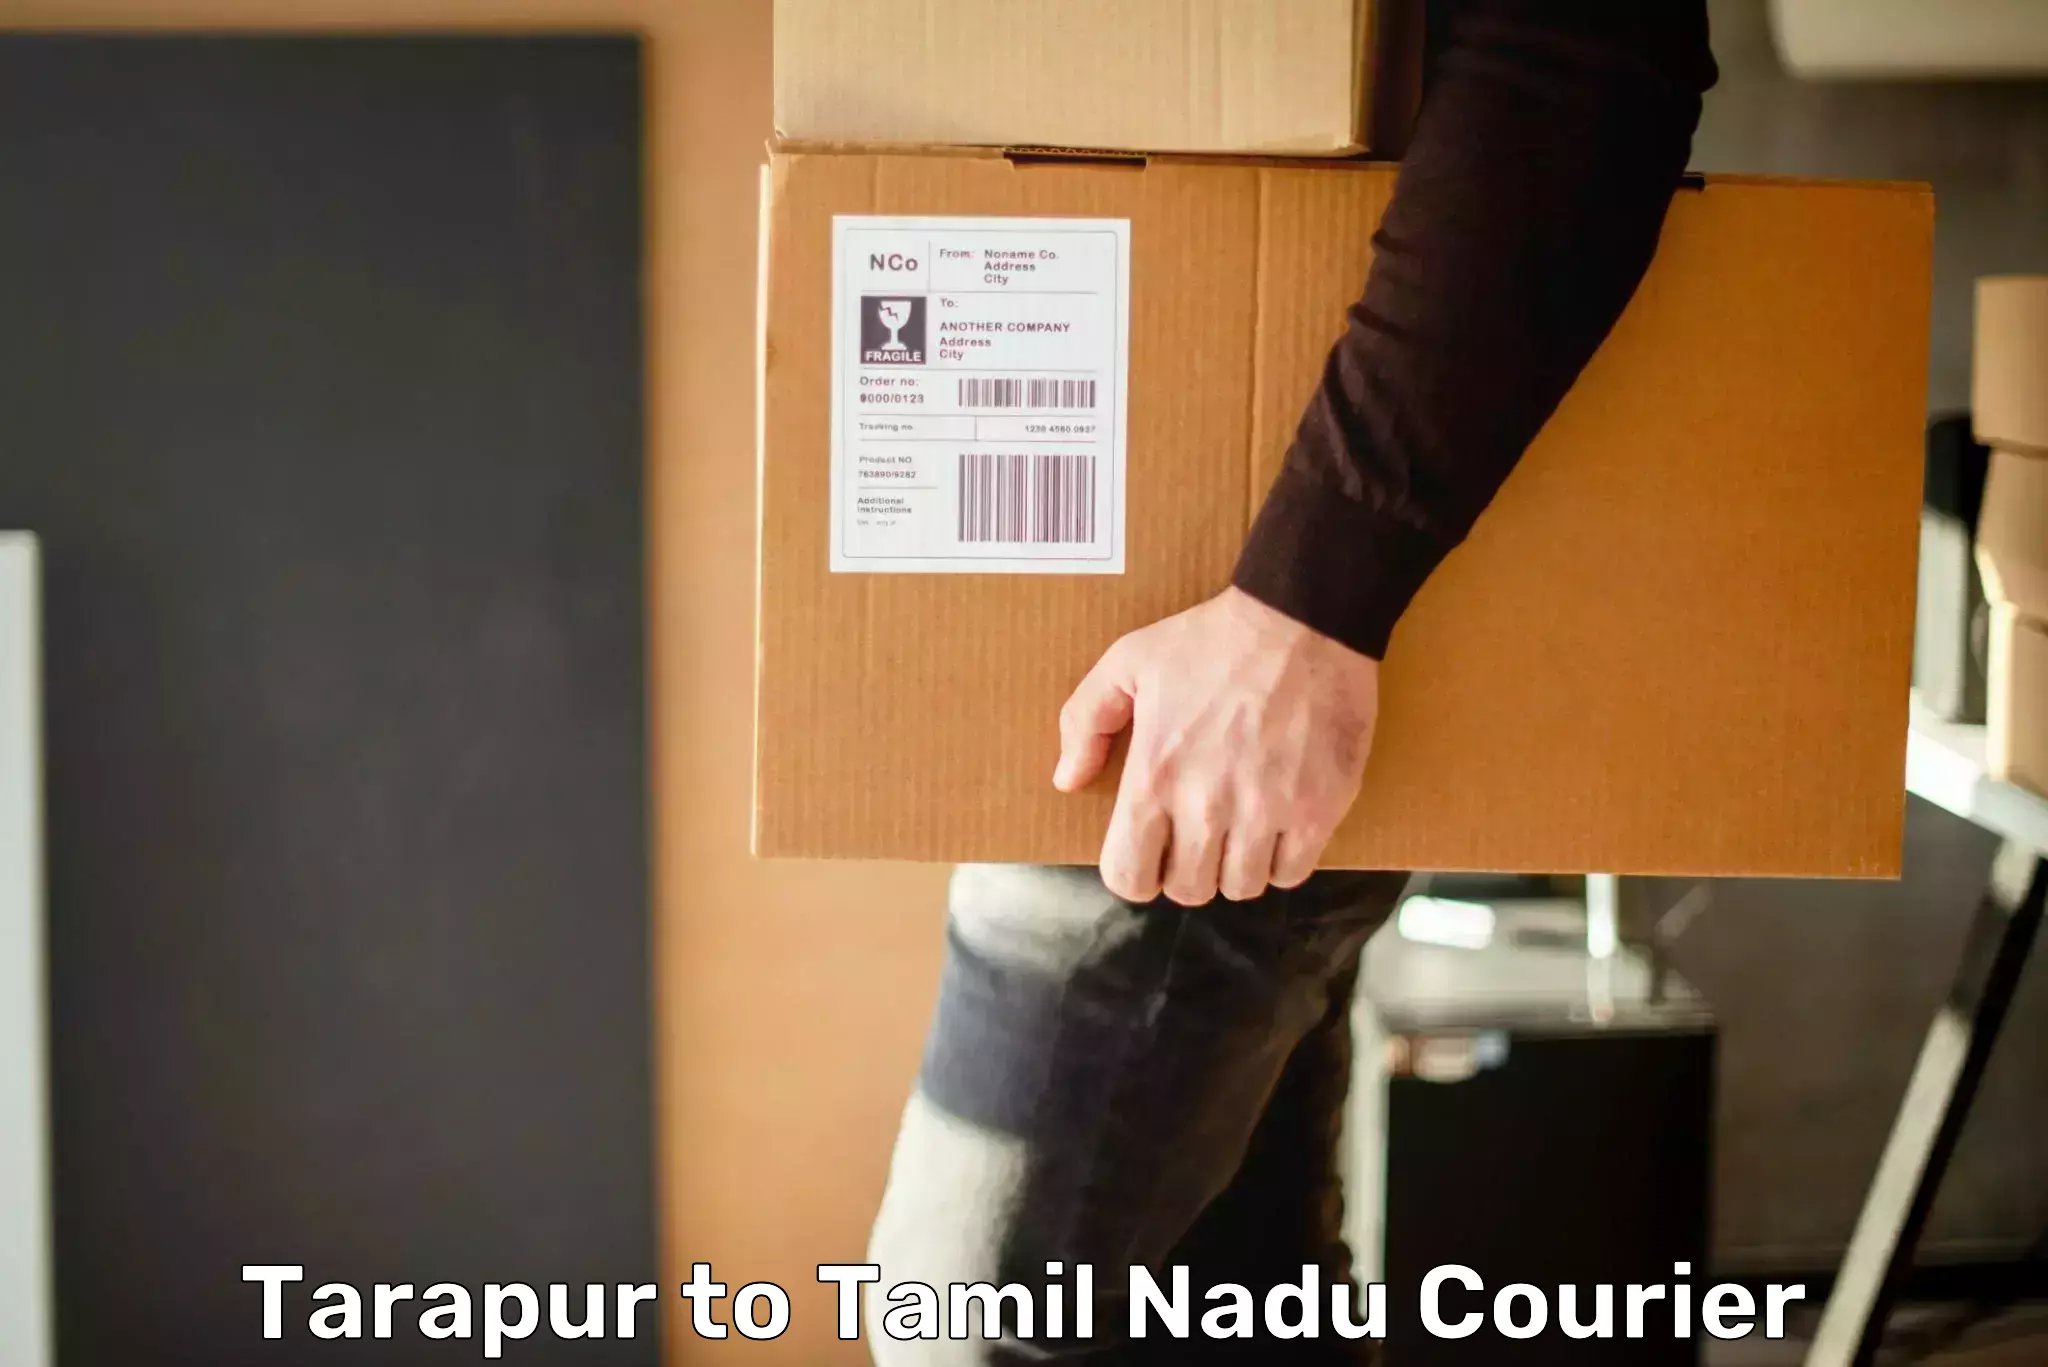 Courier service comparison Tarapur to Bhavani